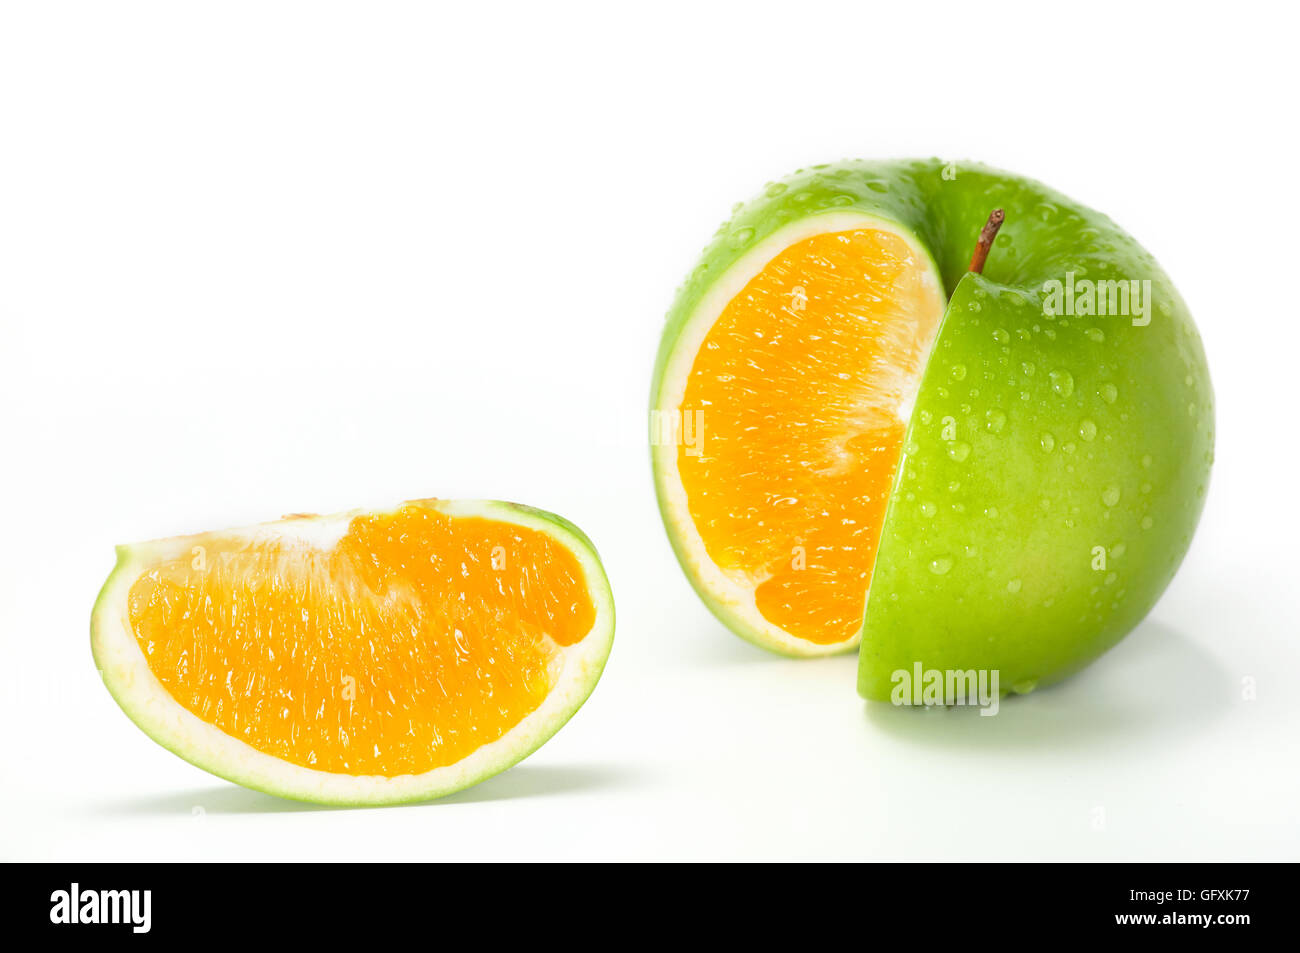 Pomme Orange hybride. Close-up image of fresh green apple combinée avec l'orange. Banque D'Images